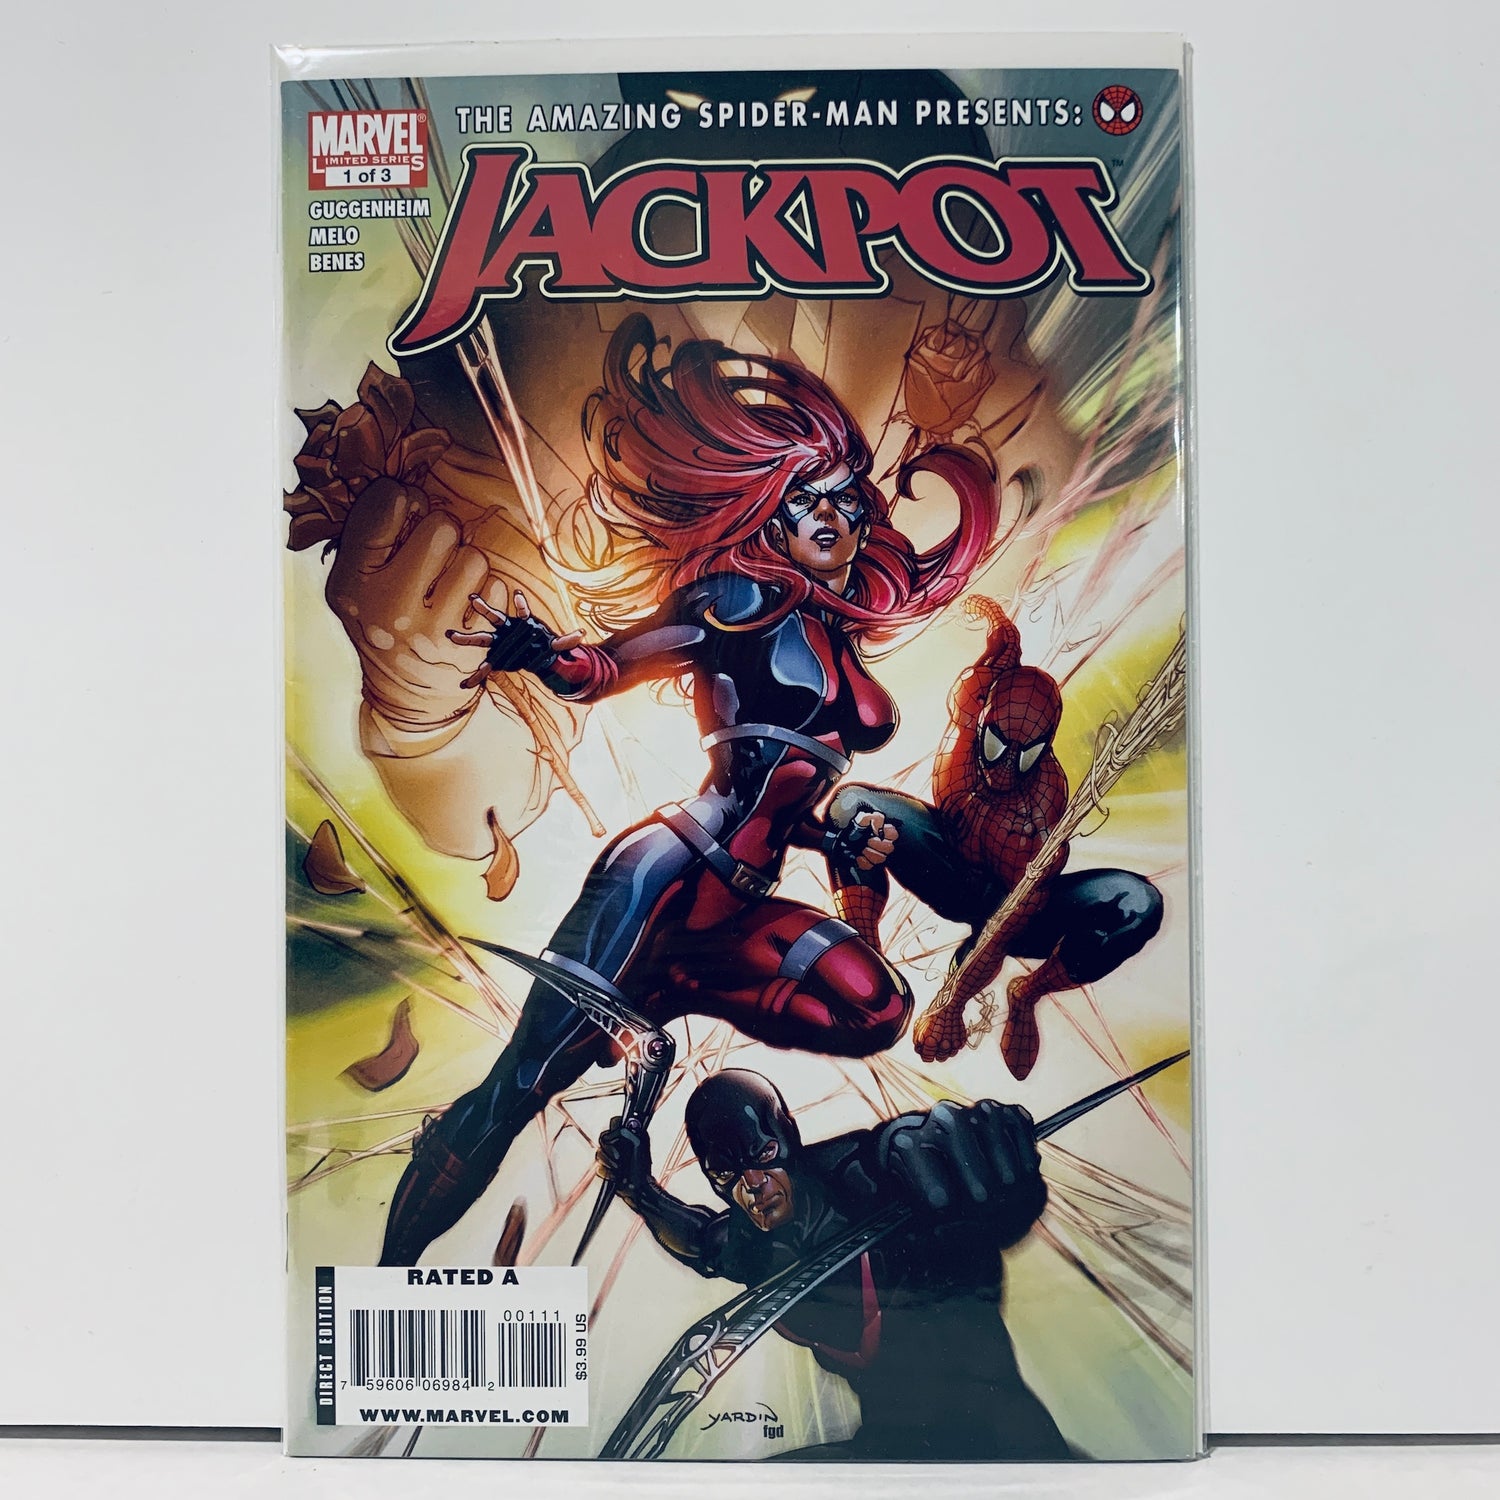 Amazing Spider-Man Presents: Jackpot (2010) #1 (VF)